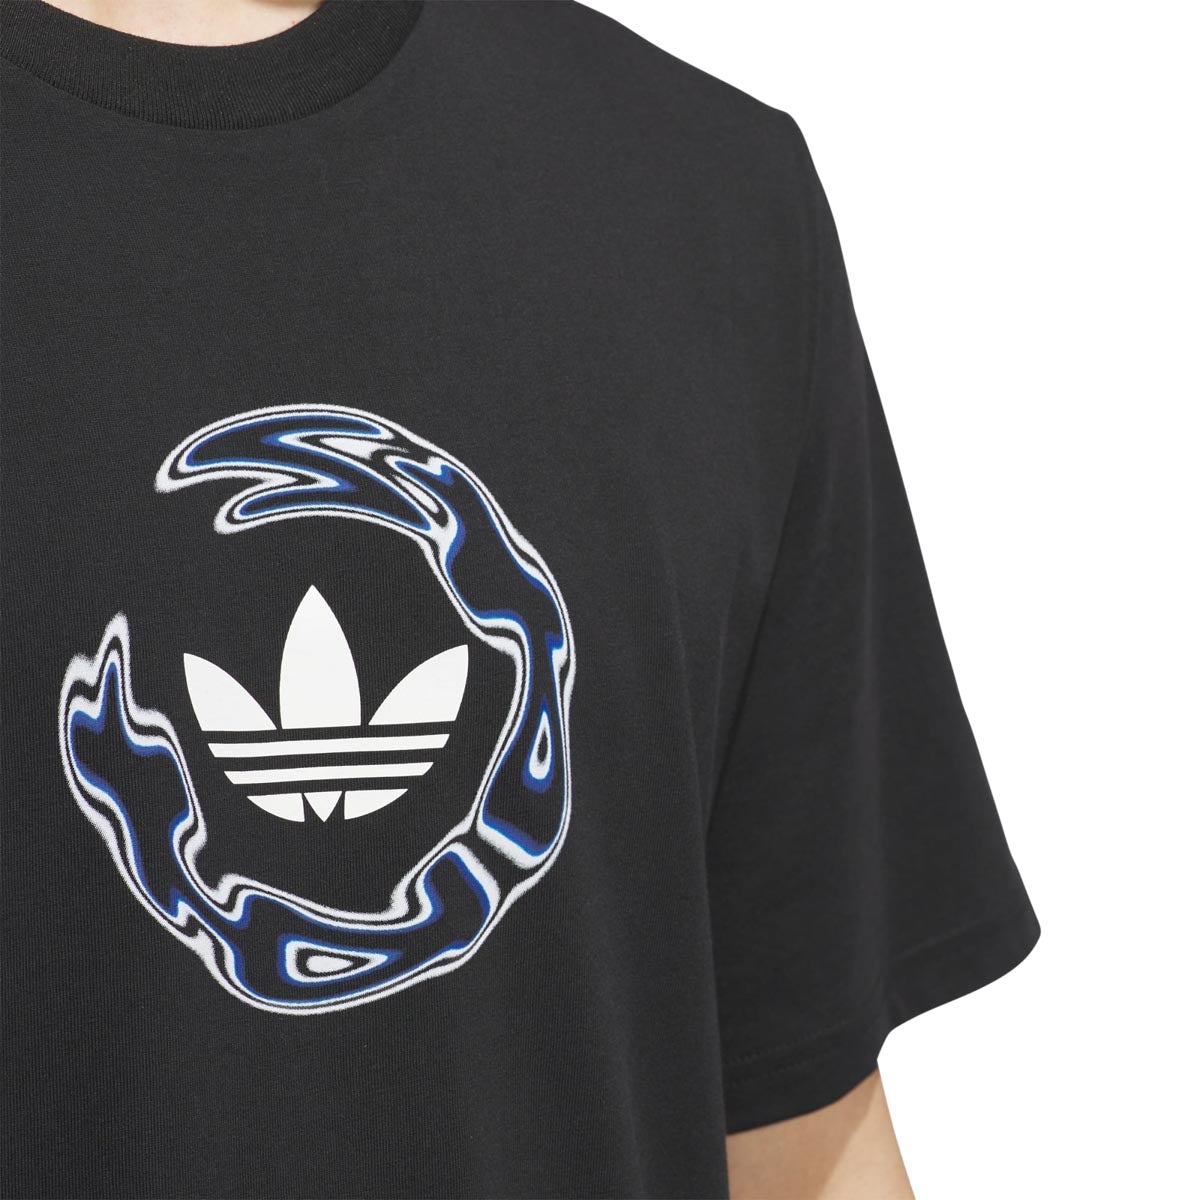 Adidas Skateboarding Wide Angle T-Shirt - Black/Royblu image 4